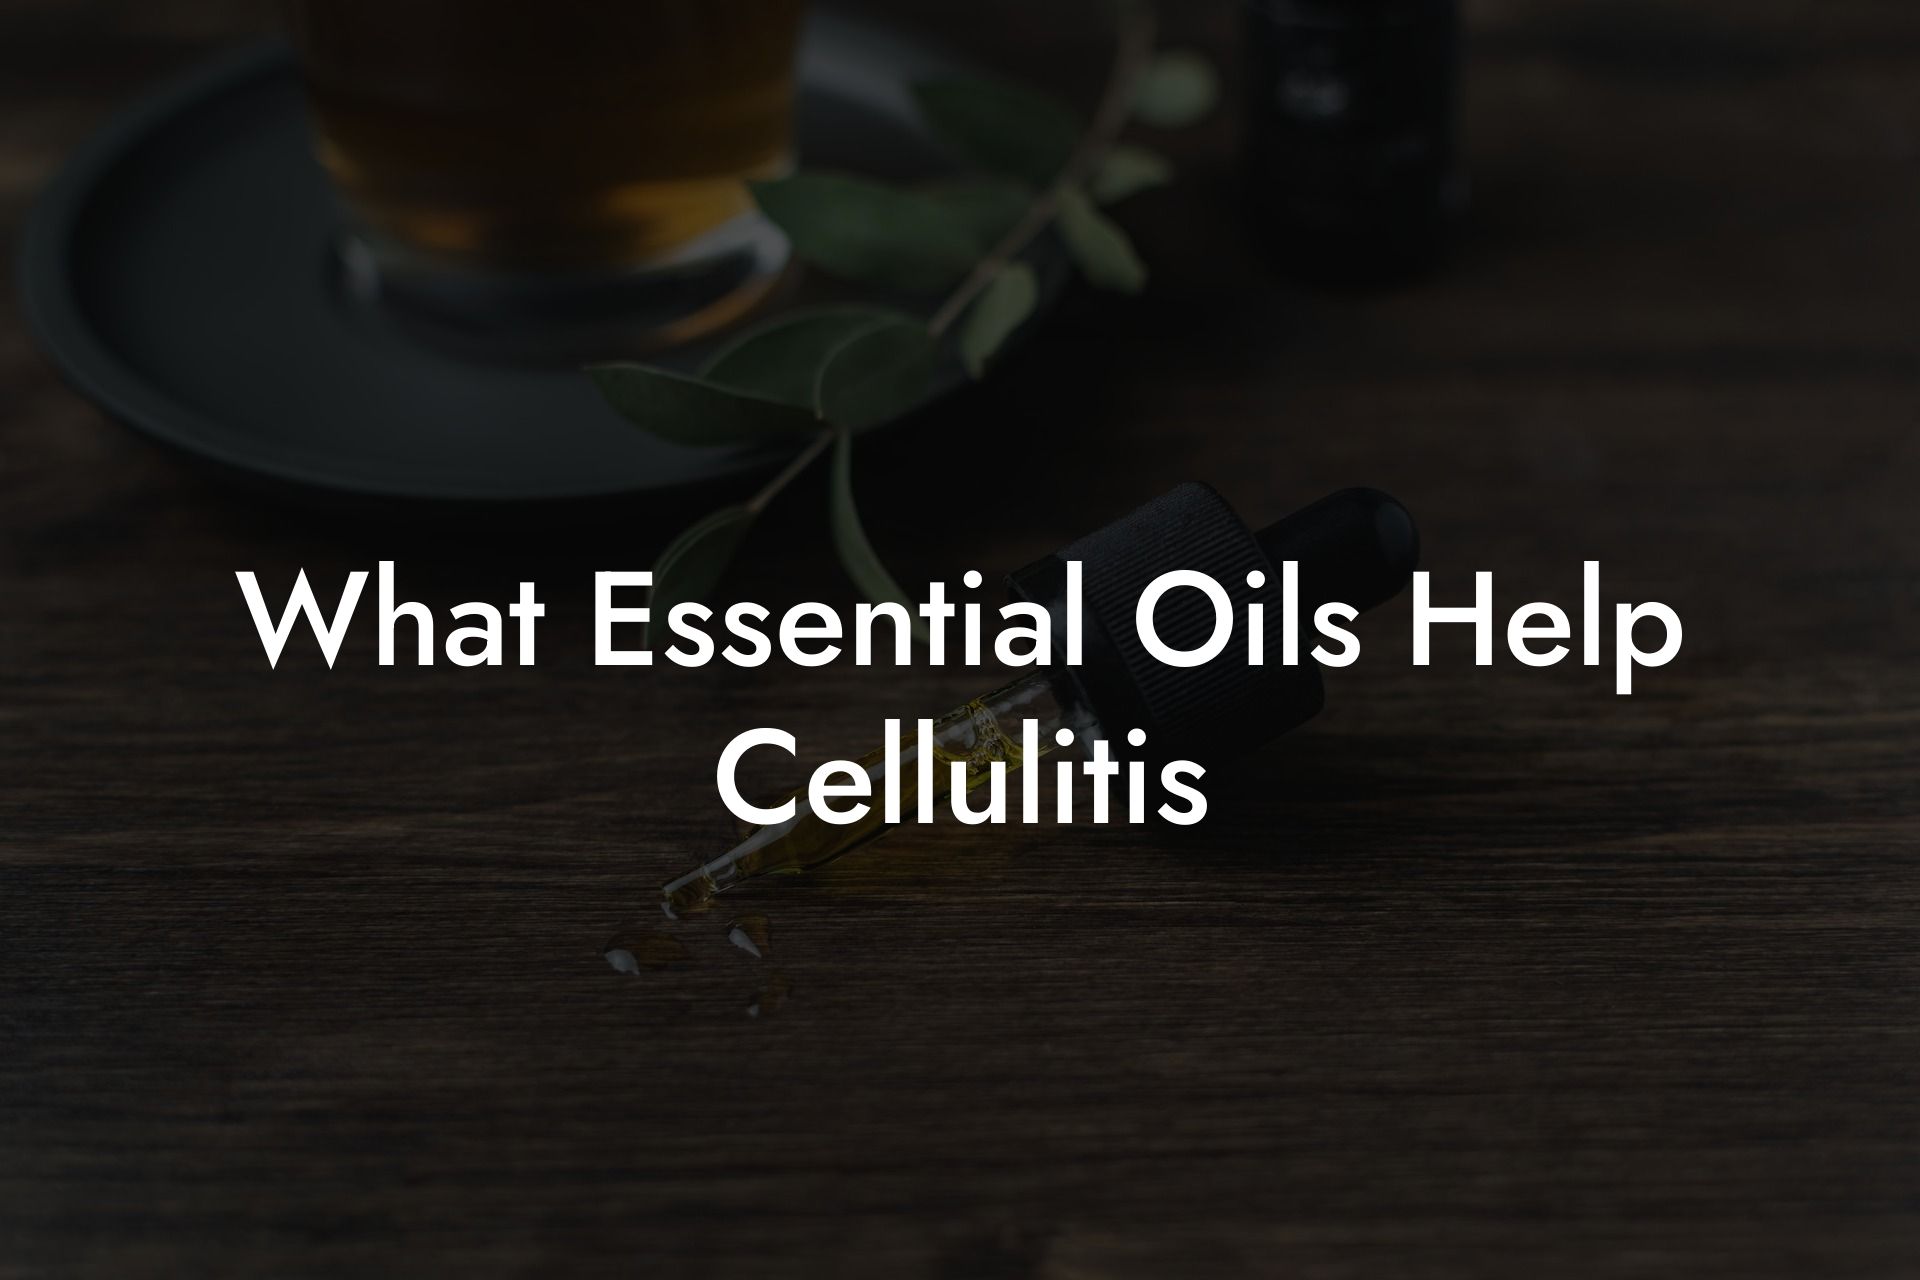 What Essential Oils Help Cellulitis